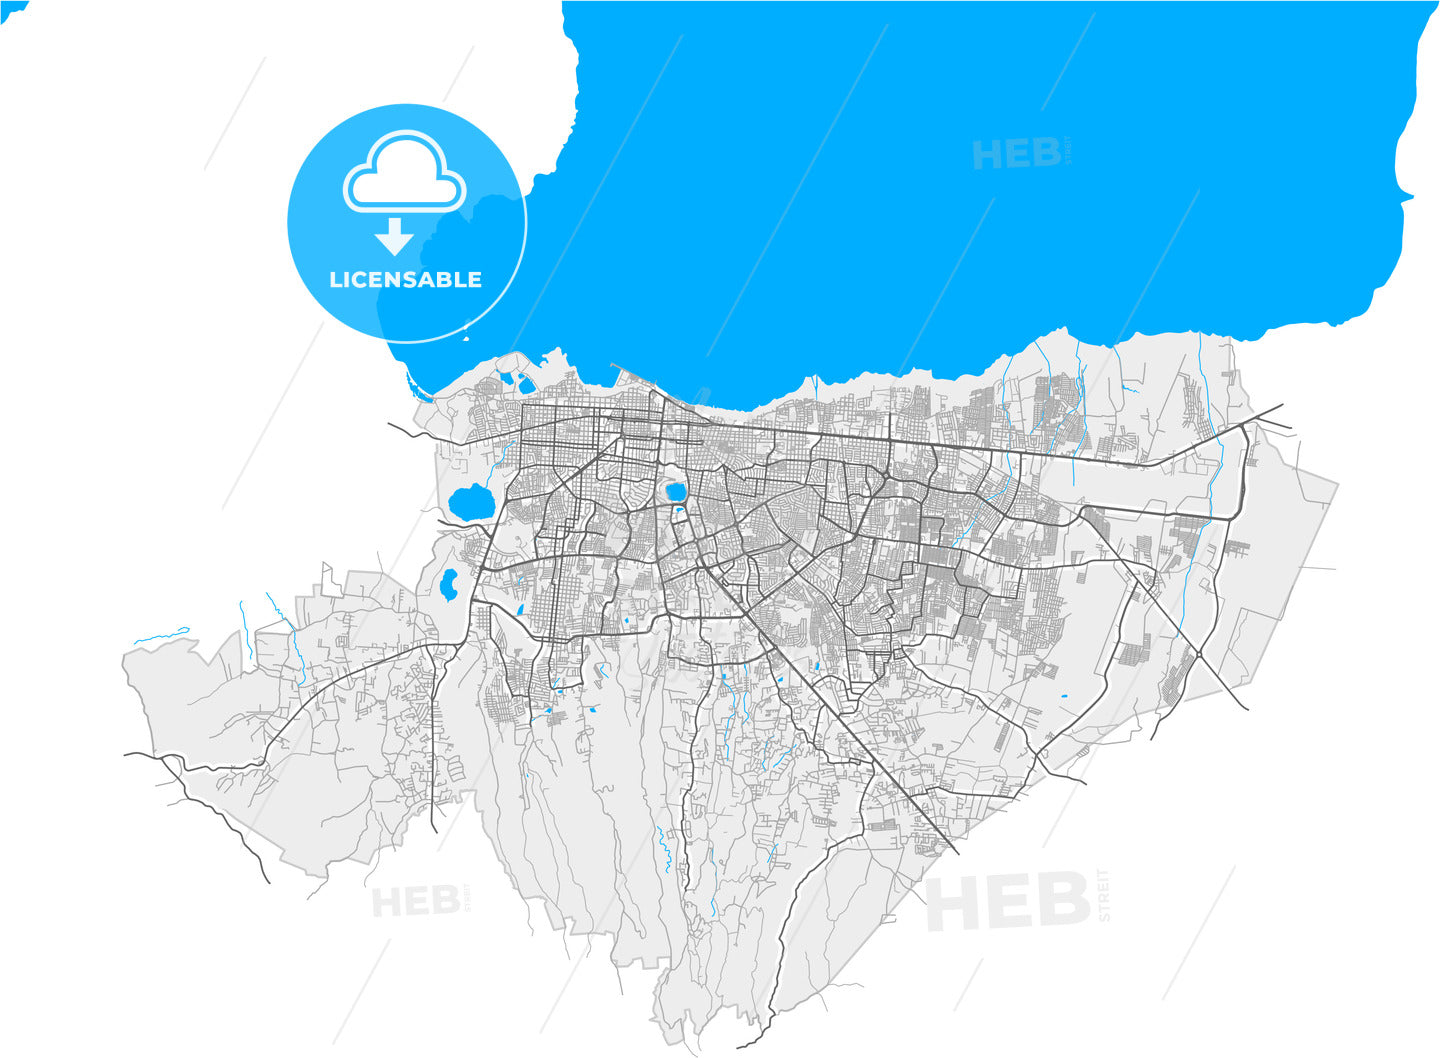 Managua, Managua, Nicaragua, high quality vector map